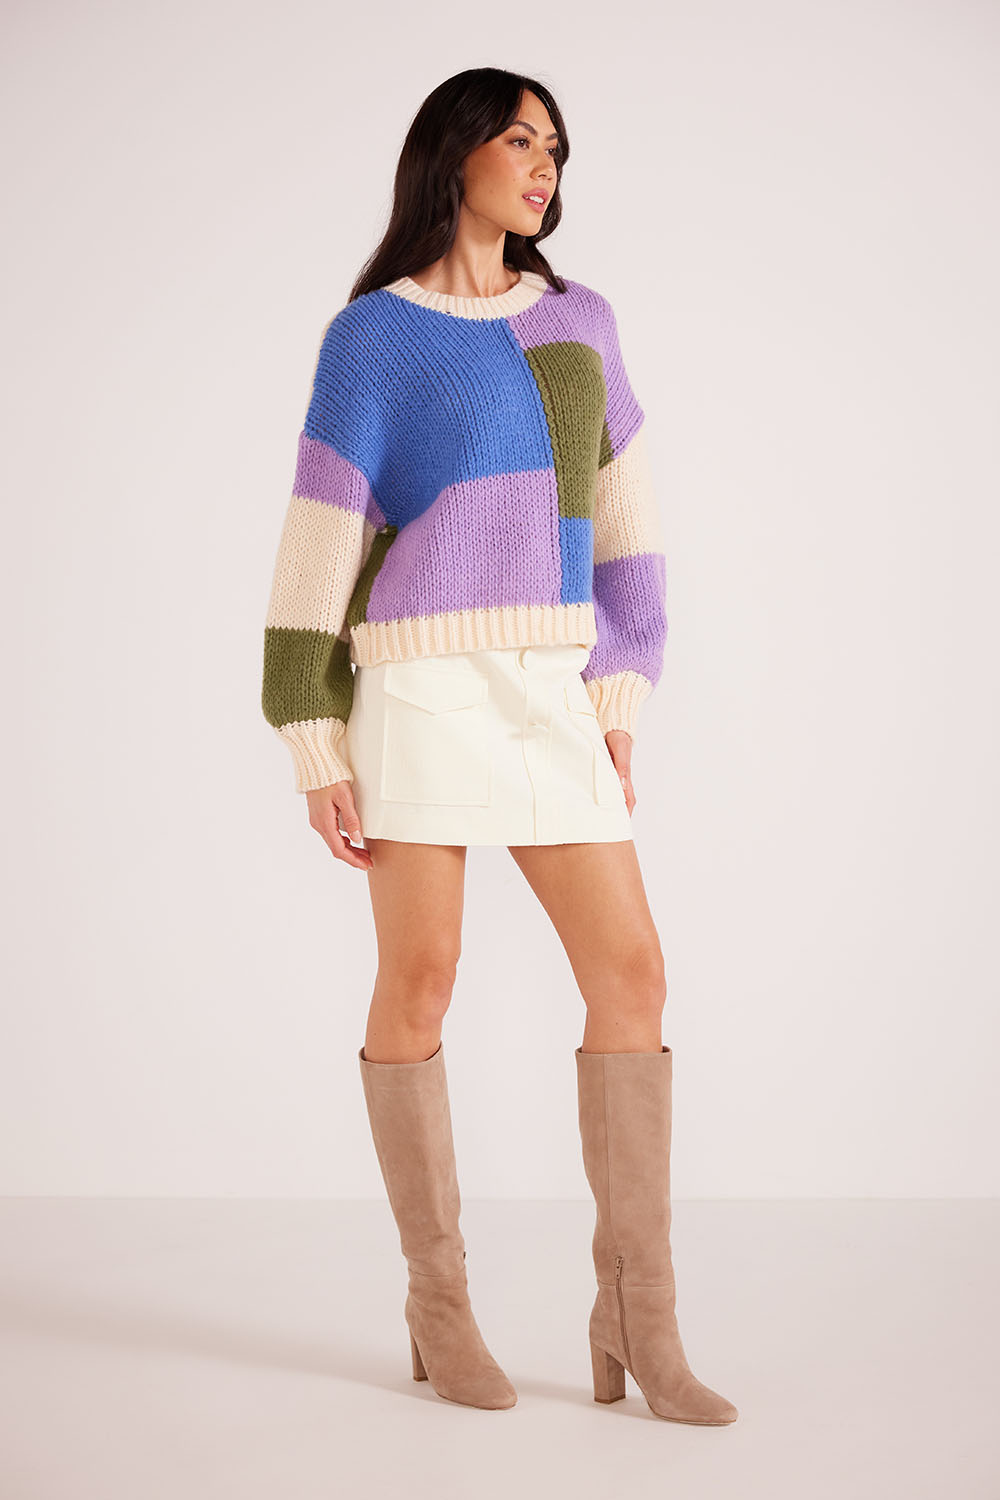 Mink Pink - Lawrence Knit Sweater - Multi Color Block - Side